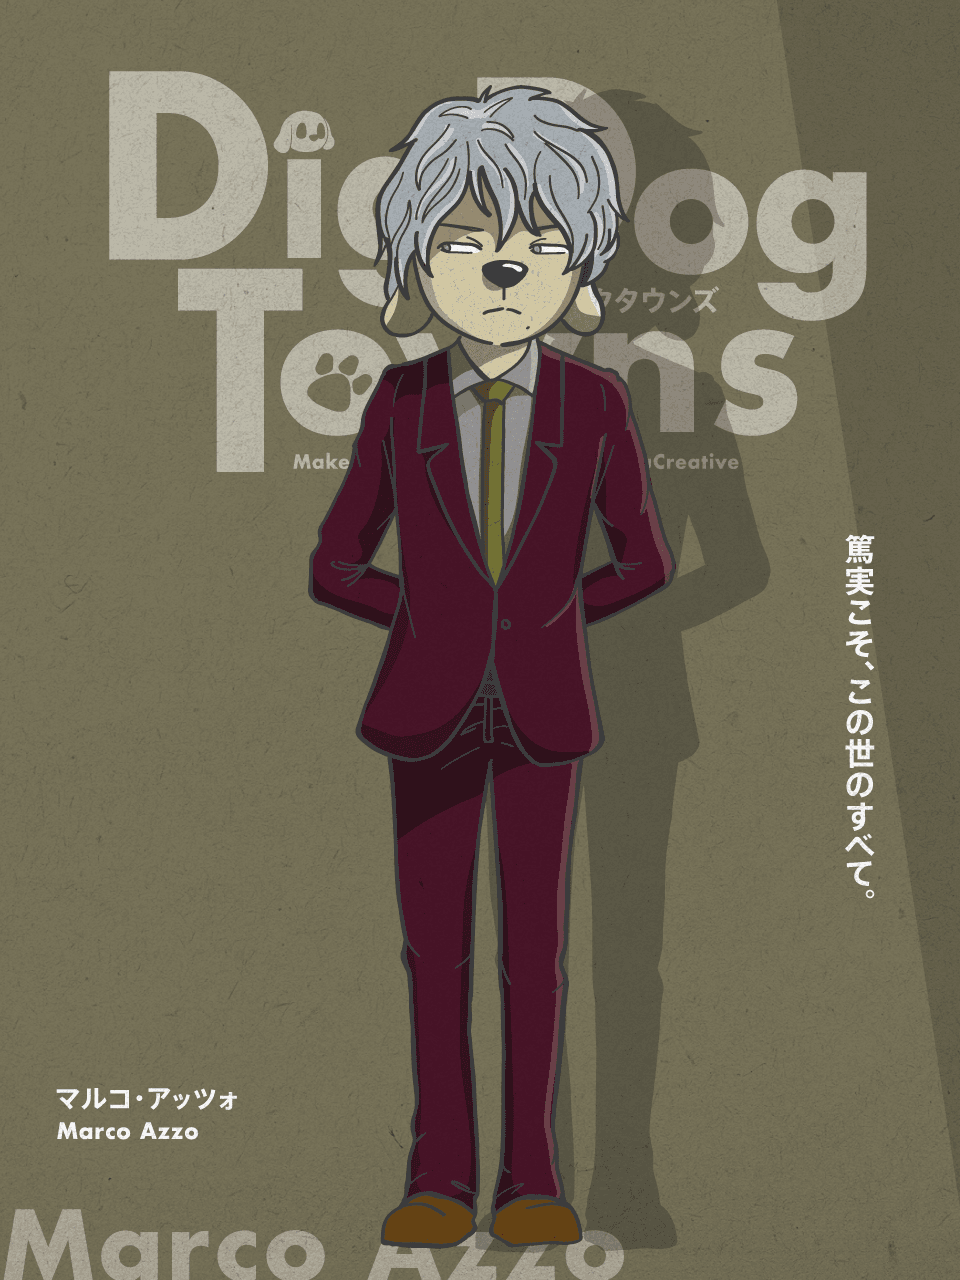 DigDogTowns character ／Marco-Azzo